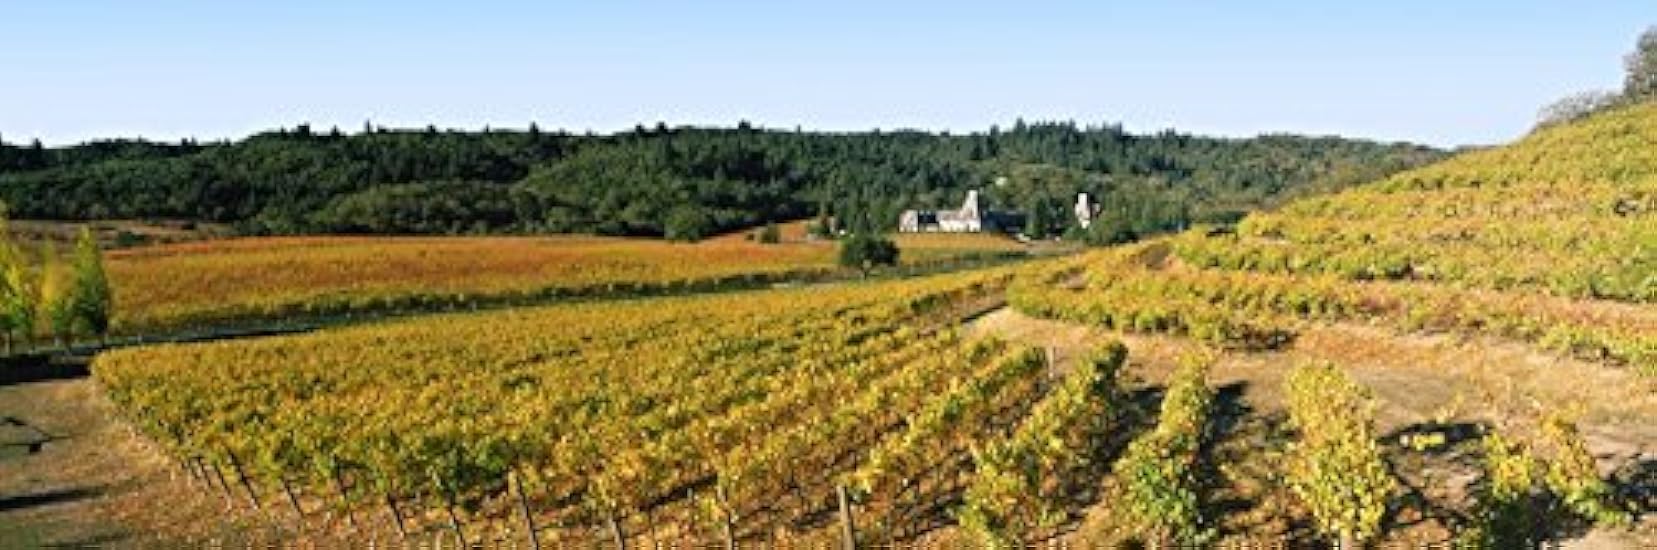 Vineyard at Chateau Souverain Winery Sonoma County Cali